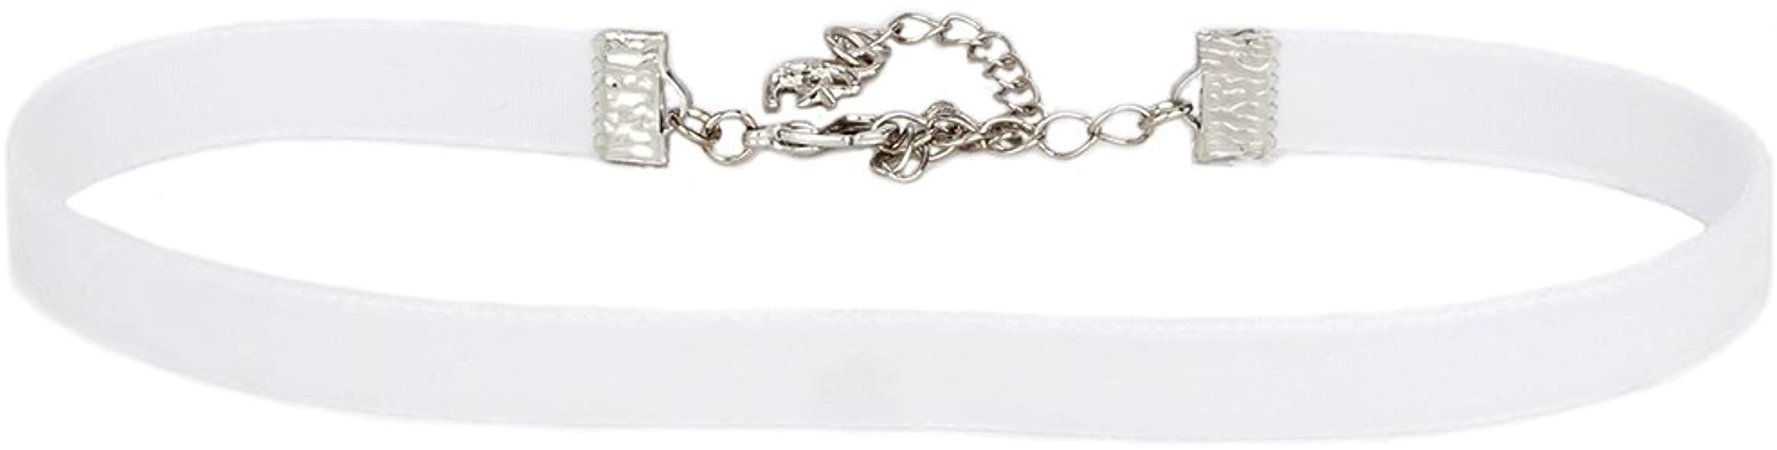 Amazon.com: Twilight's Fancy 3/8 Plain Velvet Choker Necklace (White, Small): Jewelry